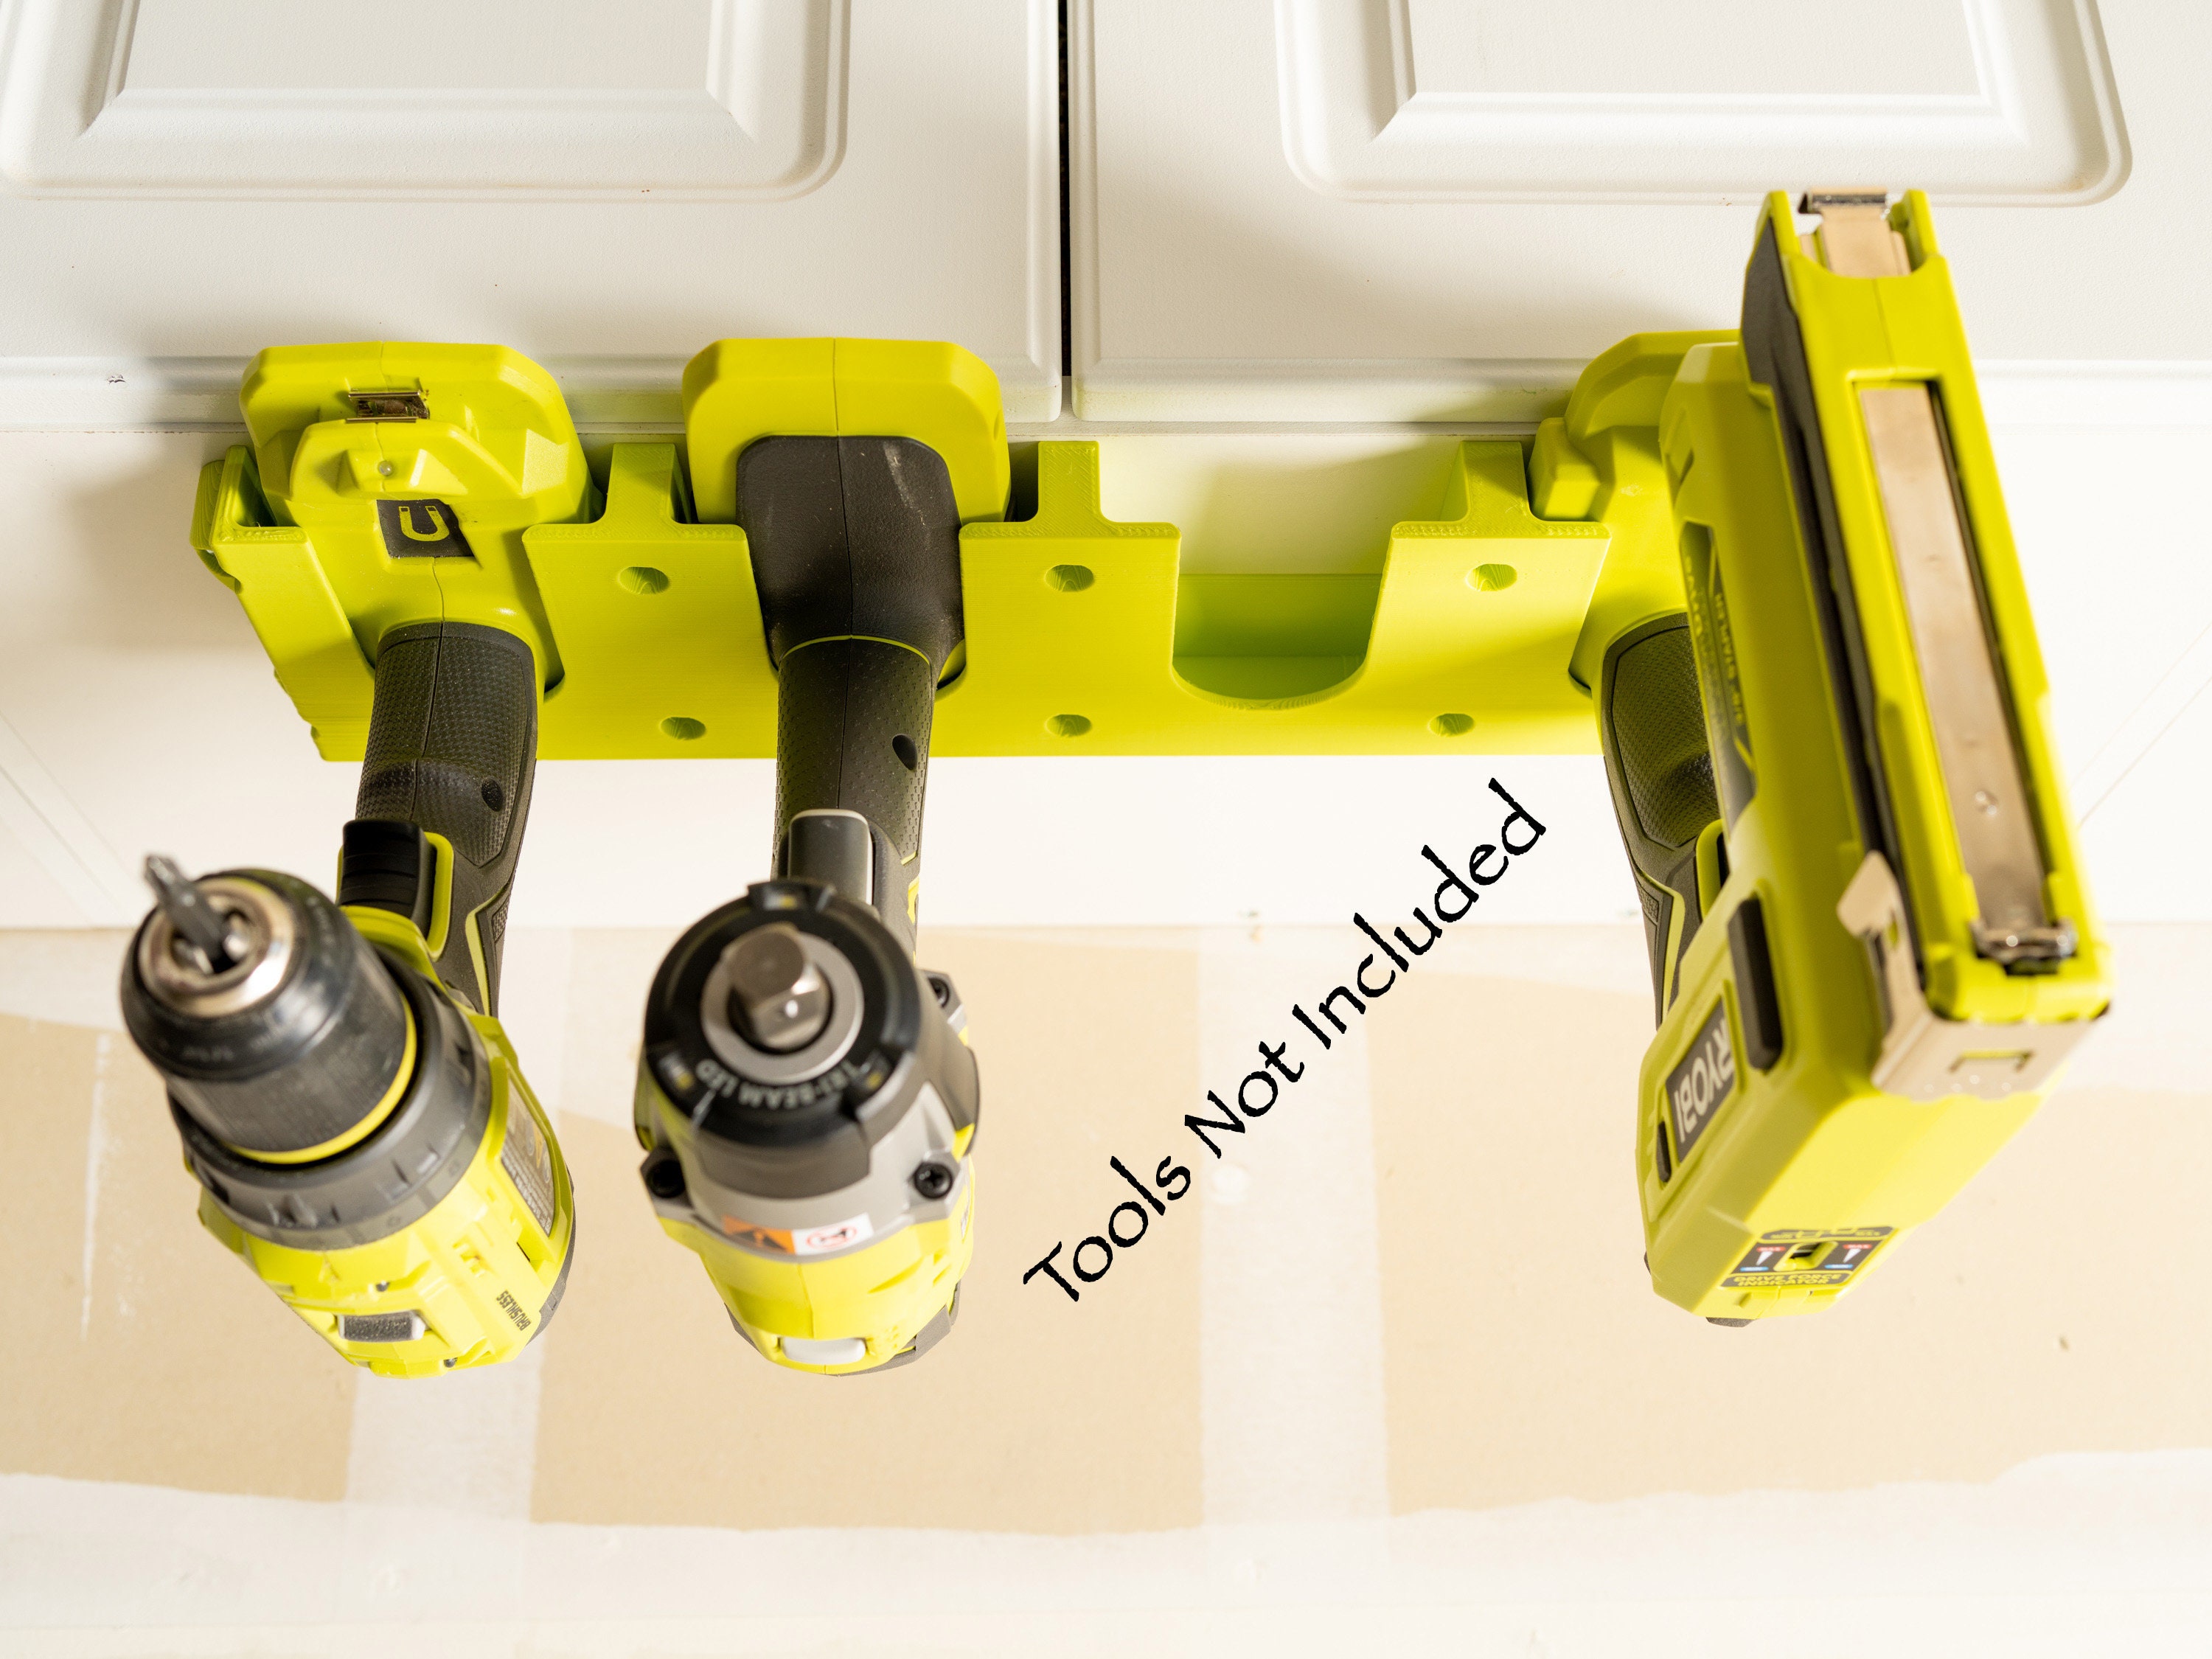 Ryobi 18v ONE Tools Under-cabinet / Shelf Mount / Holder Rack 